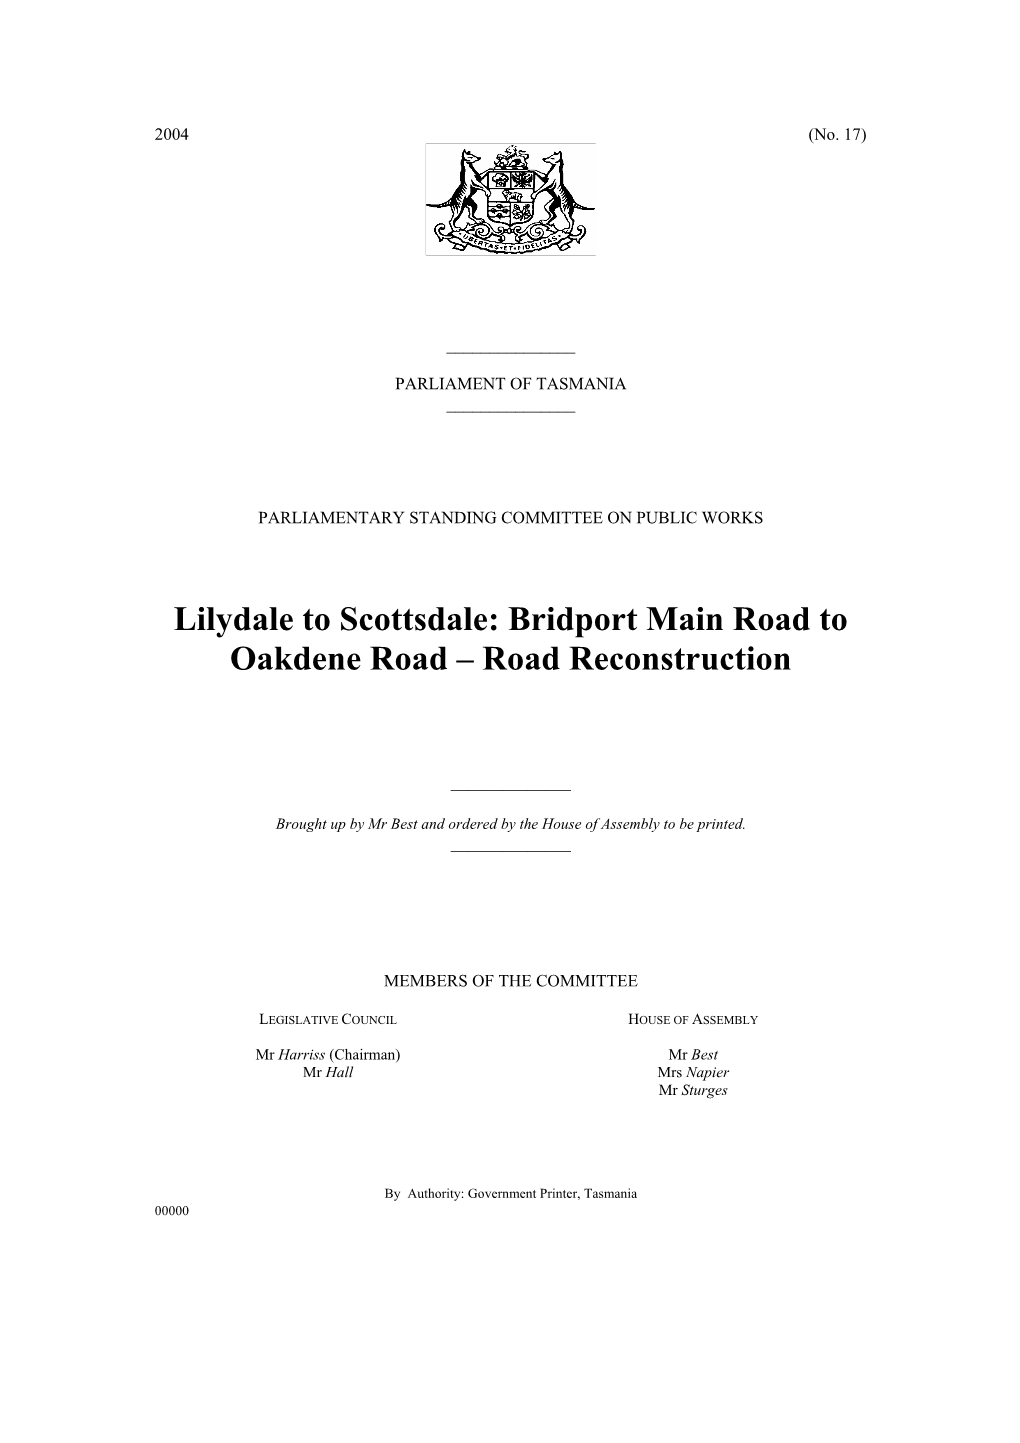 Lilydale to Scottsdale: Bridport Main Road to Oakdene Road – Road Reconstruction